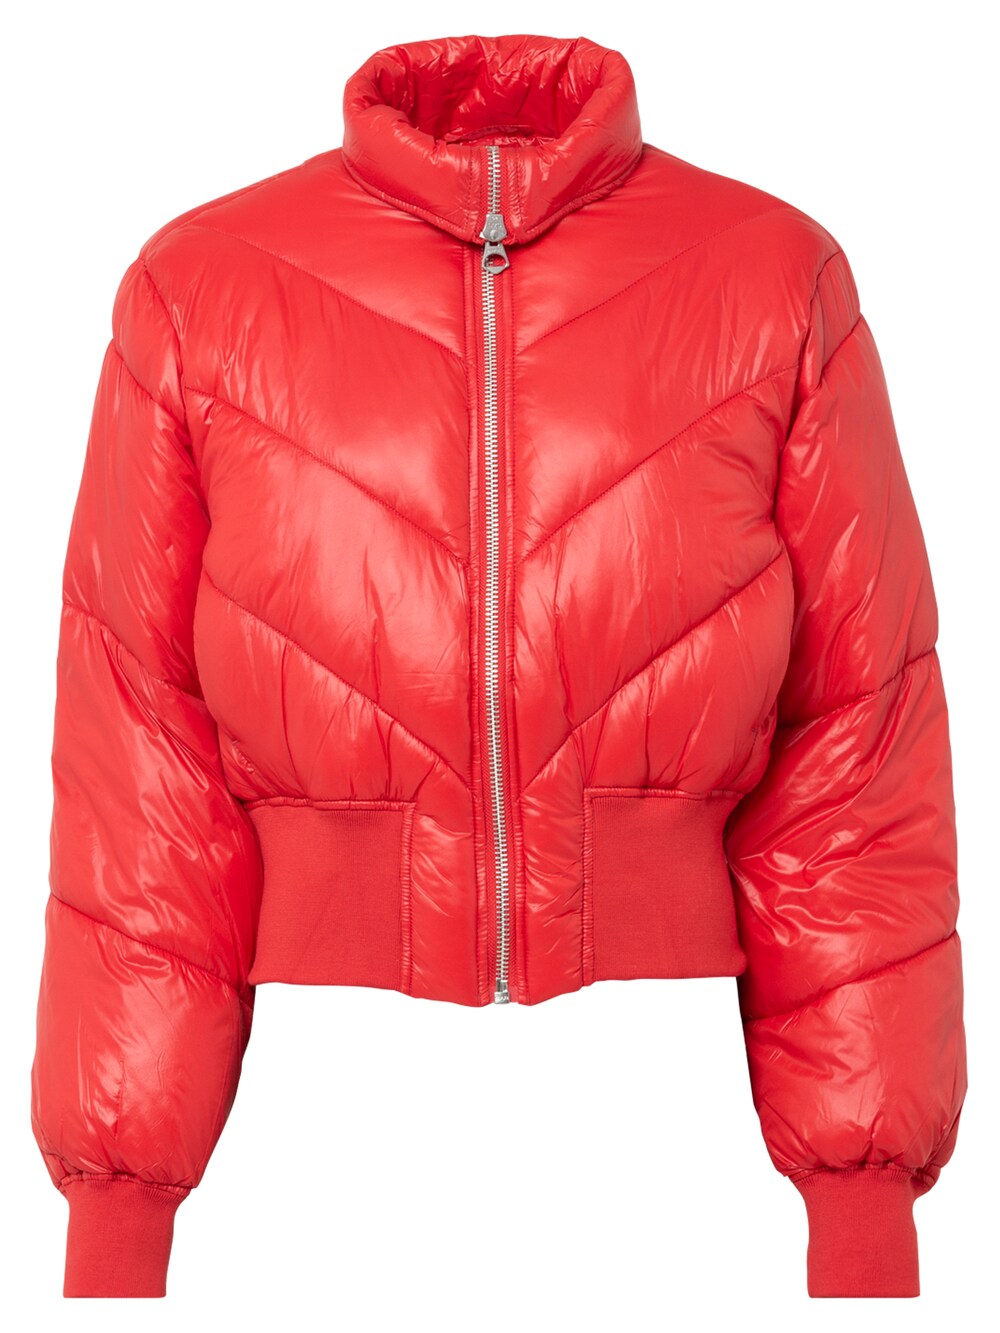 Межсезонная куртка Weekday Wield, красный межсезонная куртка weekday blade бежевый